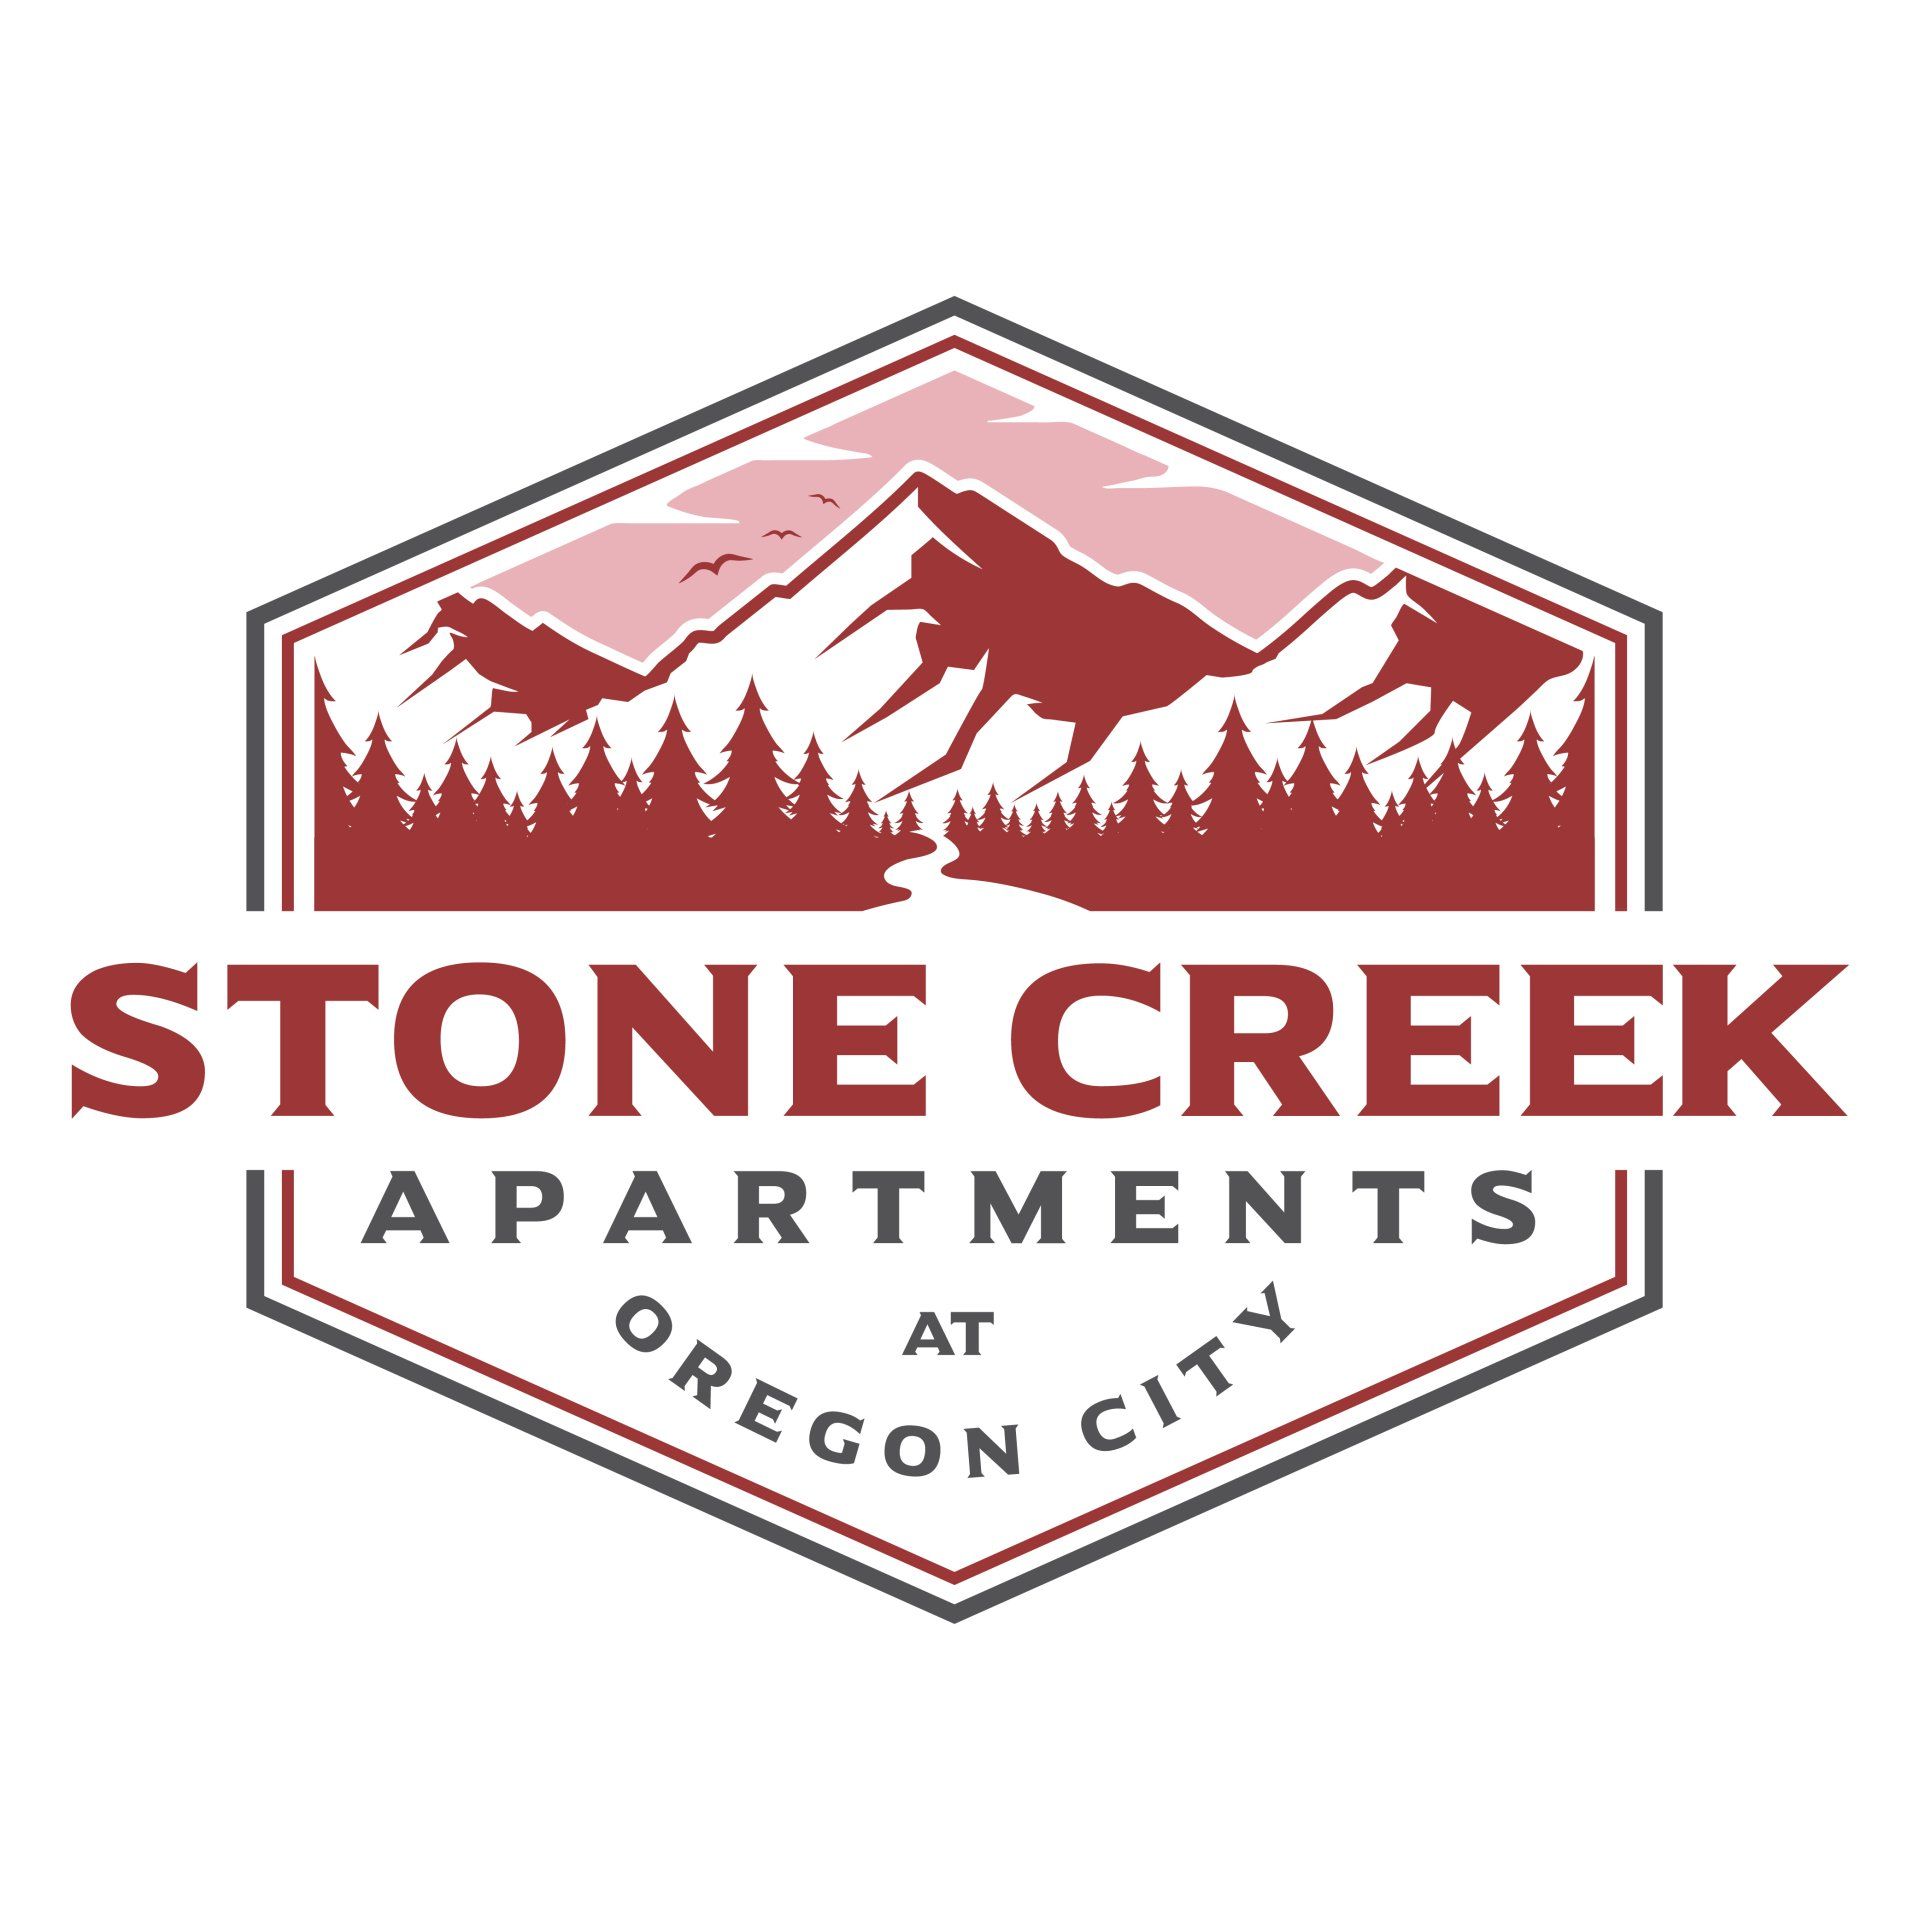 Stone Creek Apartments at Oregon City - call 503-655-6441